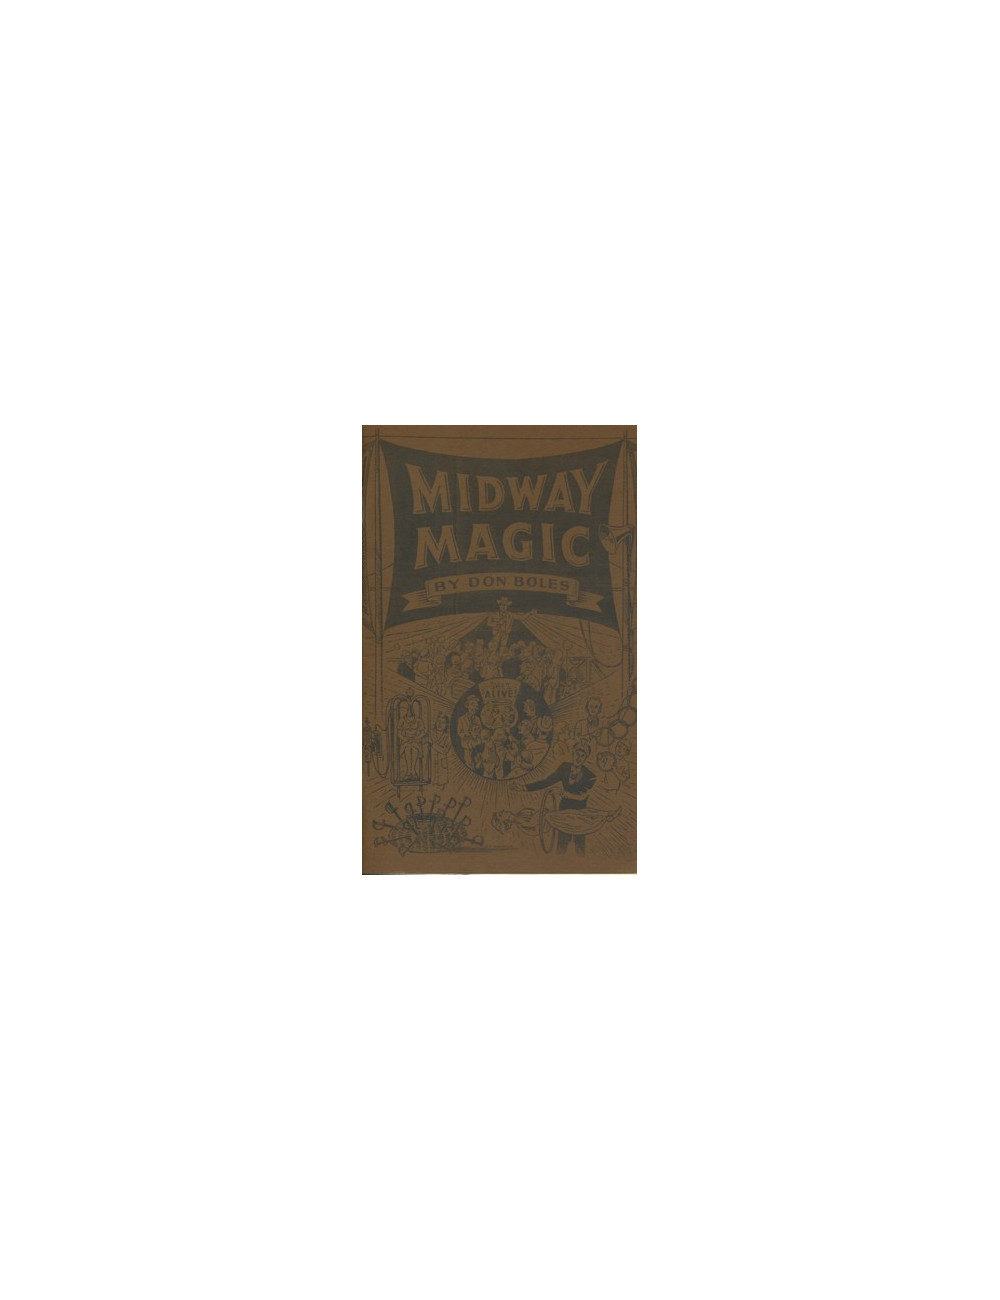 MIDWAY MAGIC (Don BOLES)